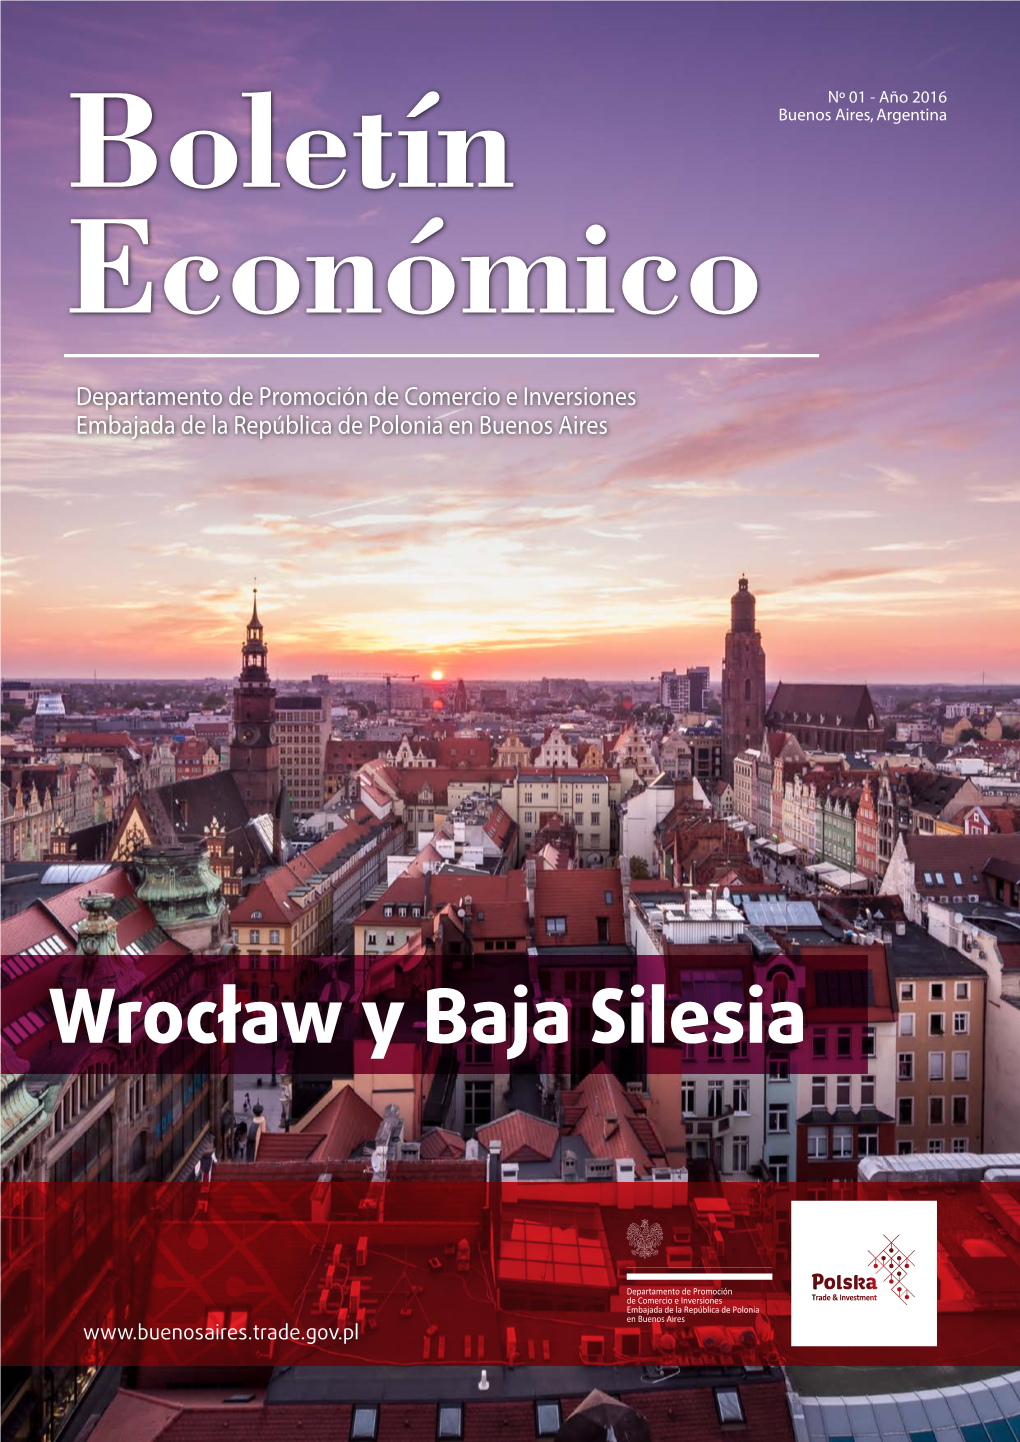 Wrocław Y Baja Silesia